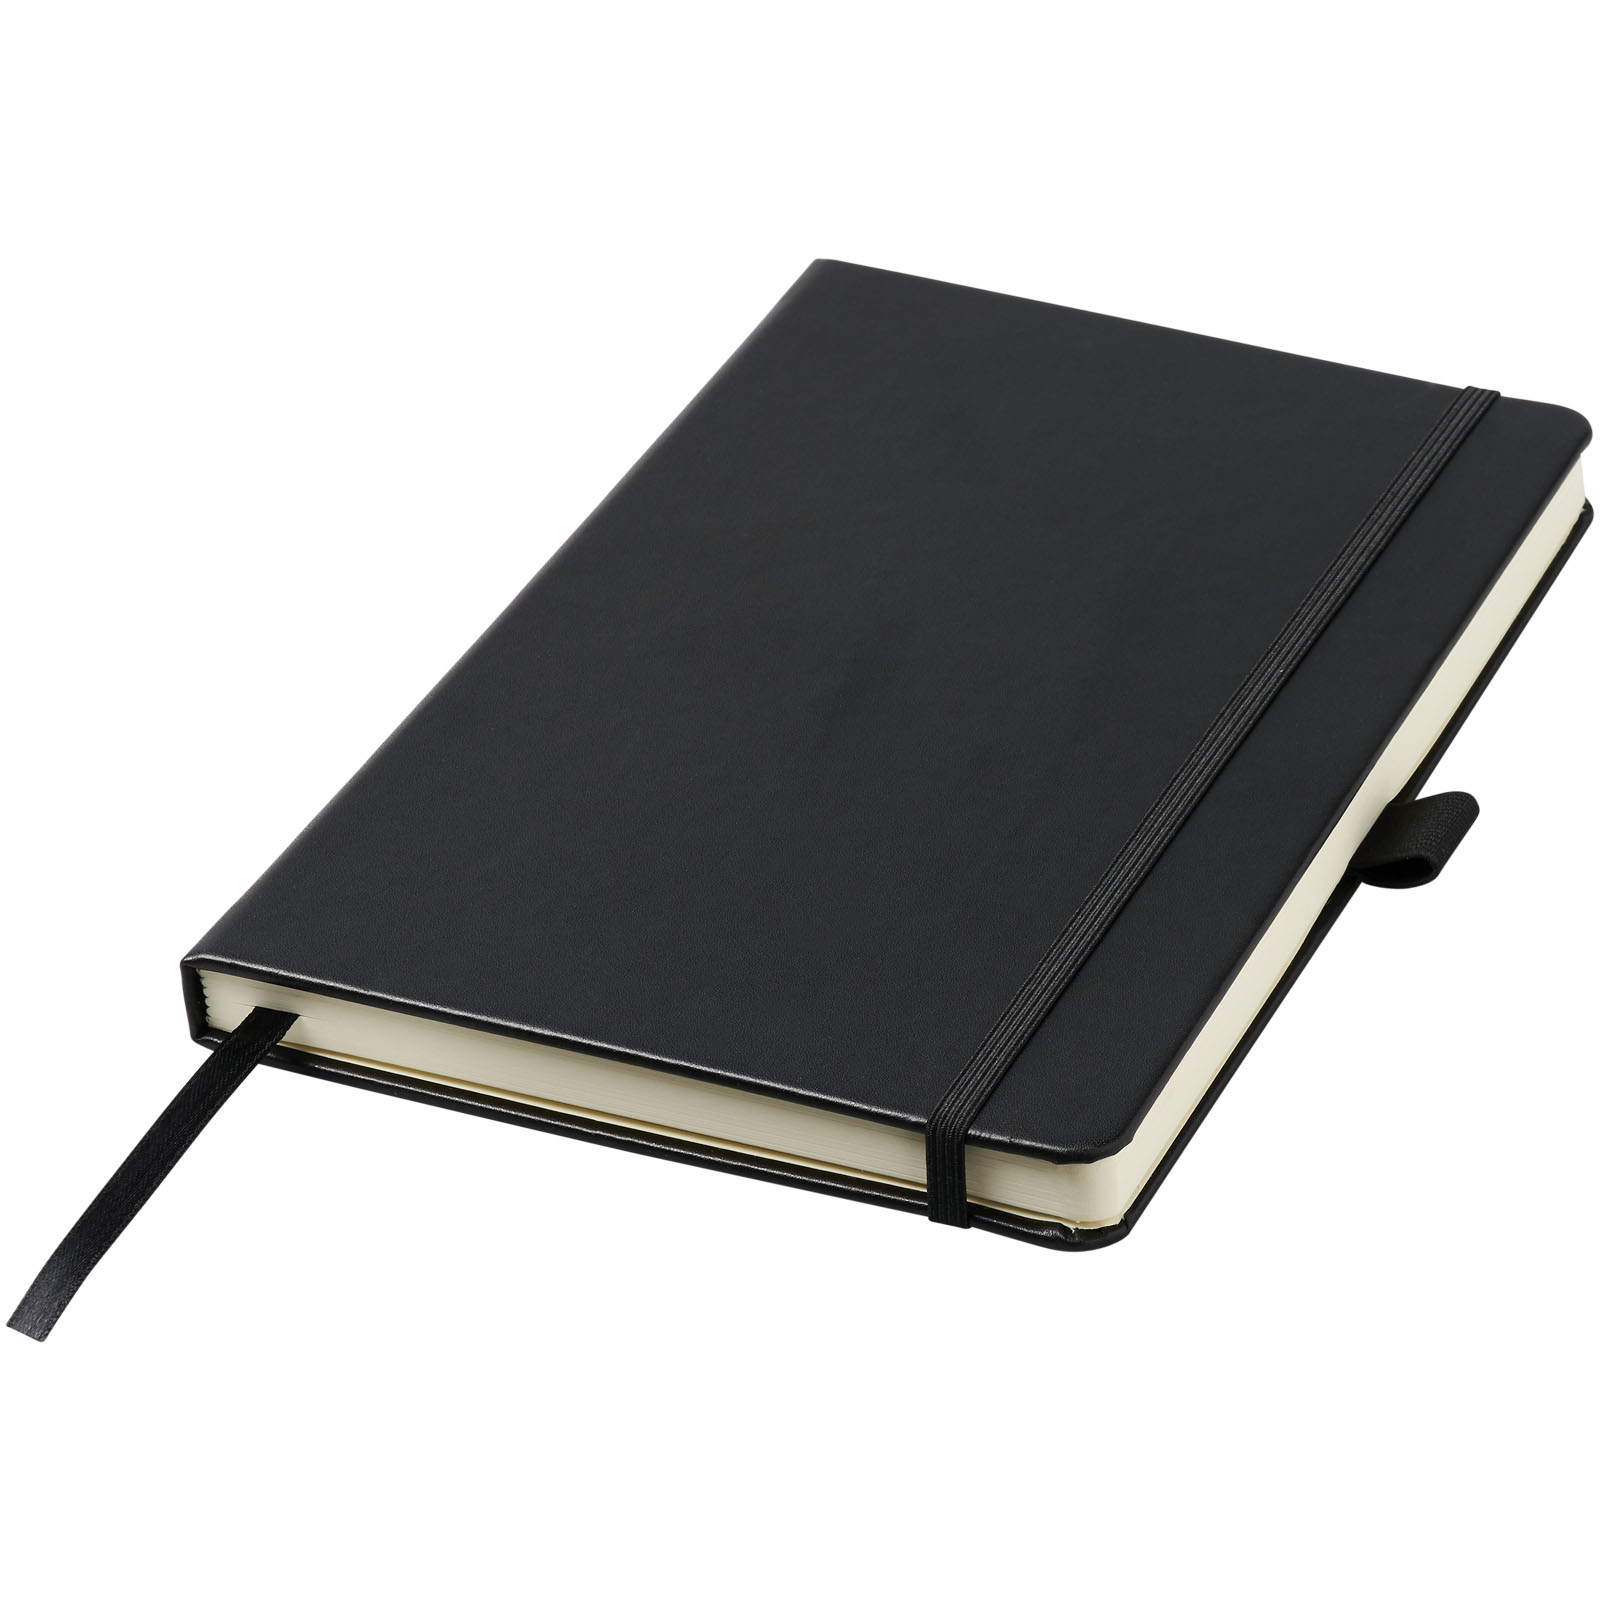 Hard cover notebooks - Nova A5 bound notebook